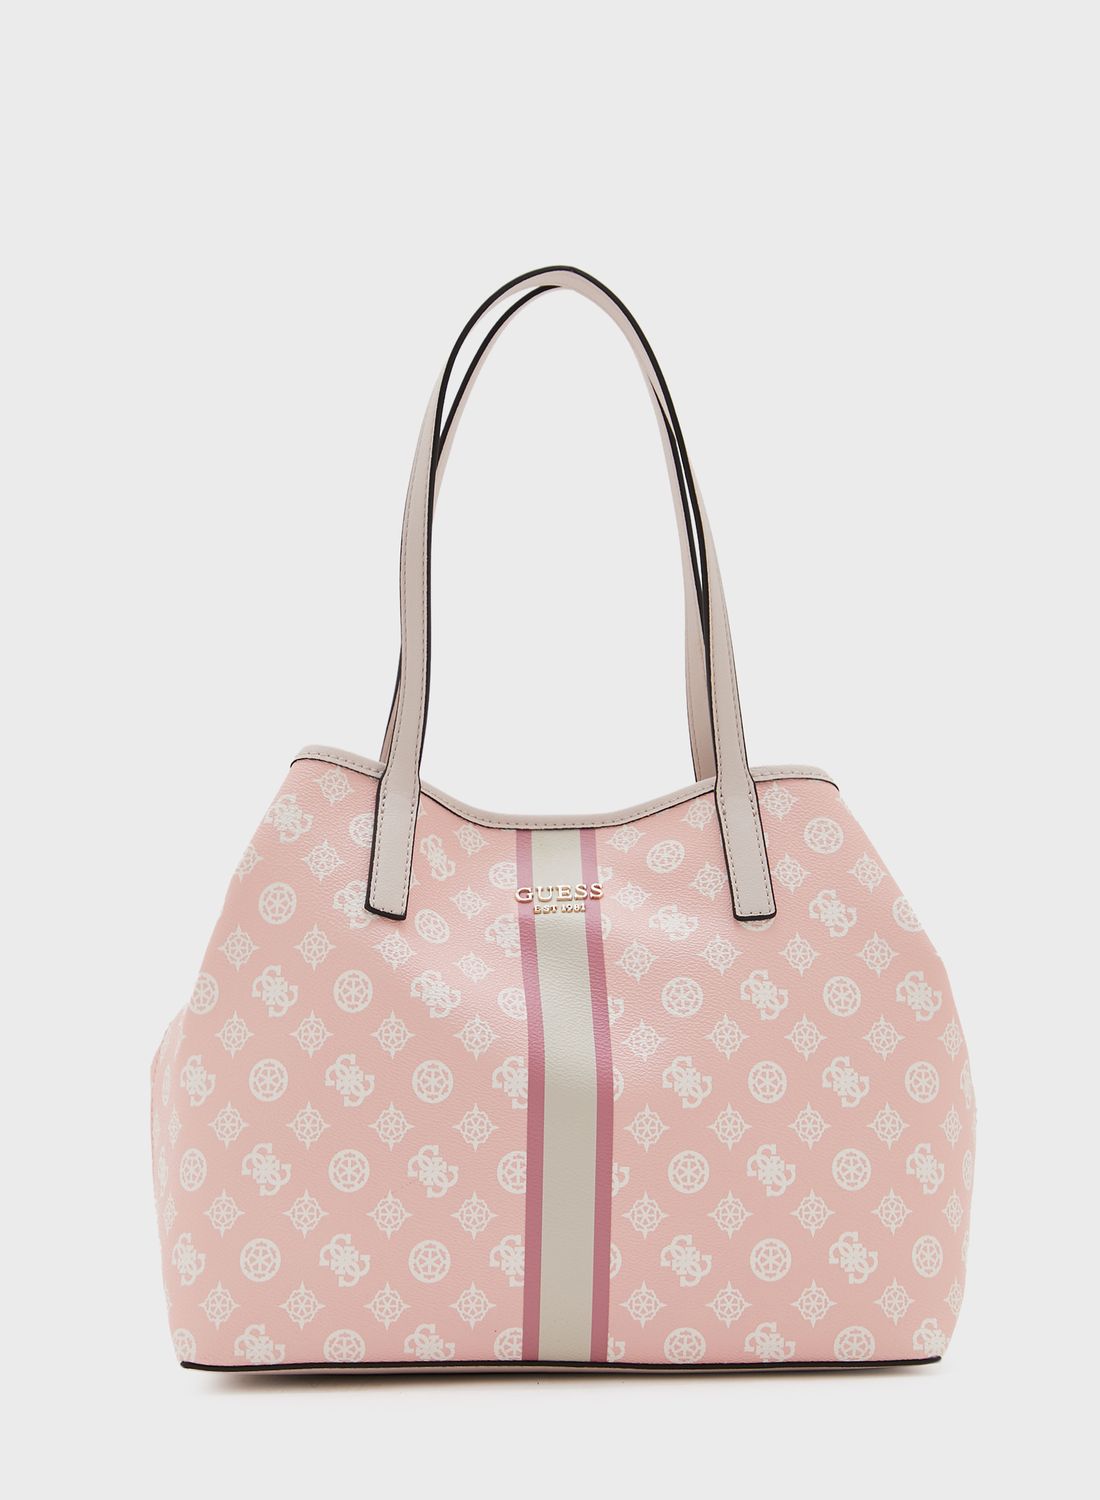 Guess Monique Small Tote Bag For Women, Latte/Pink price in Saudi Arabia,  Saudi Arabia